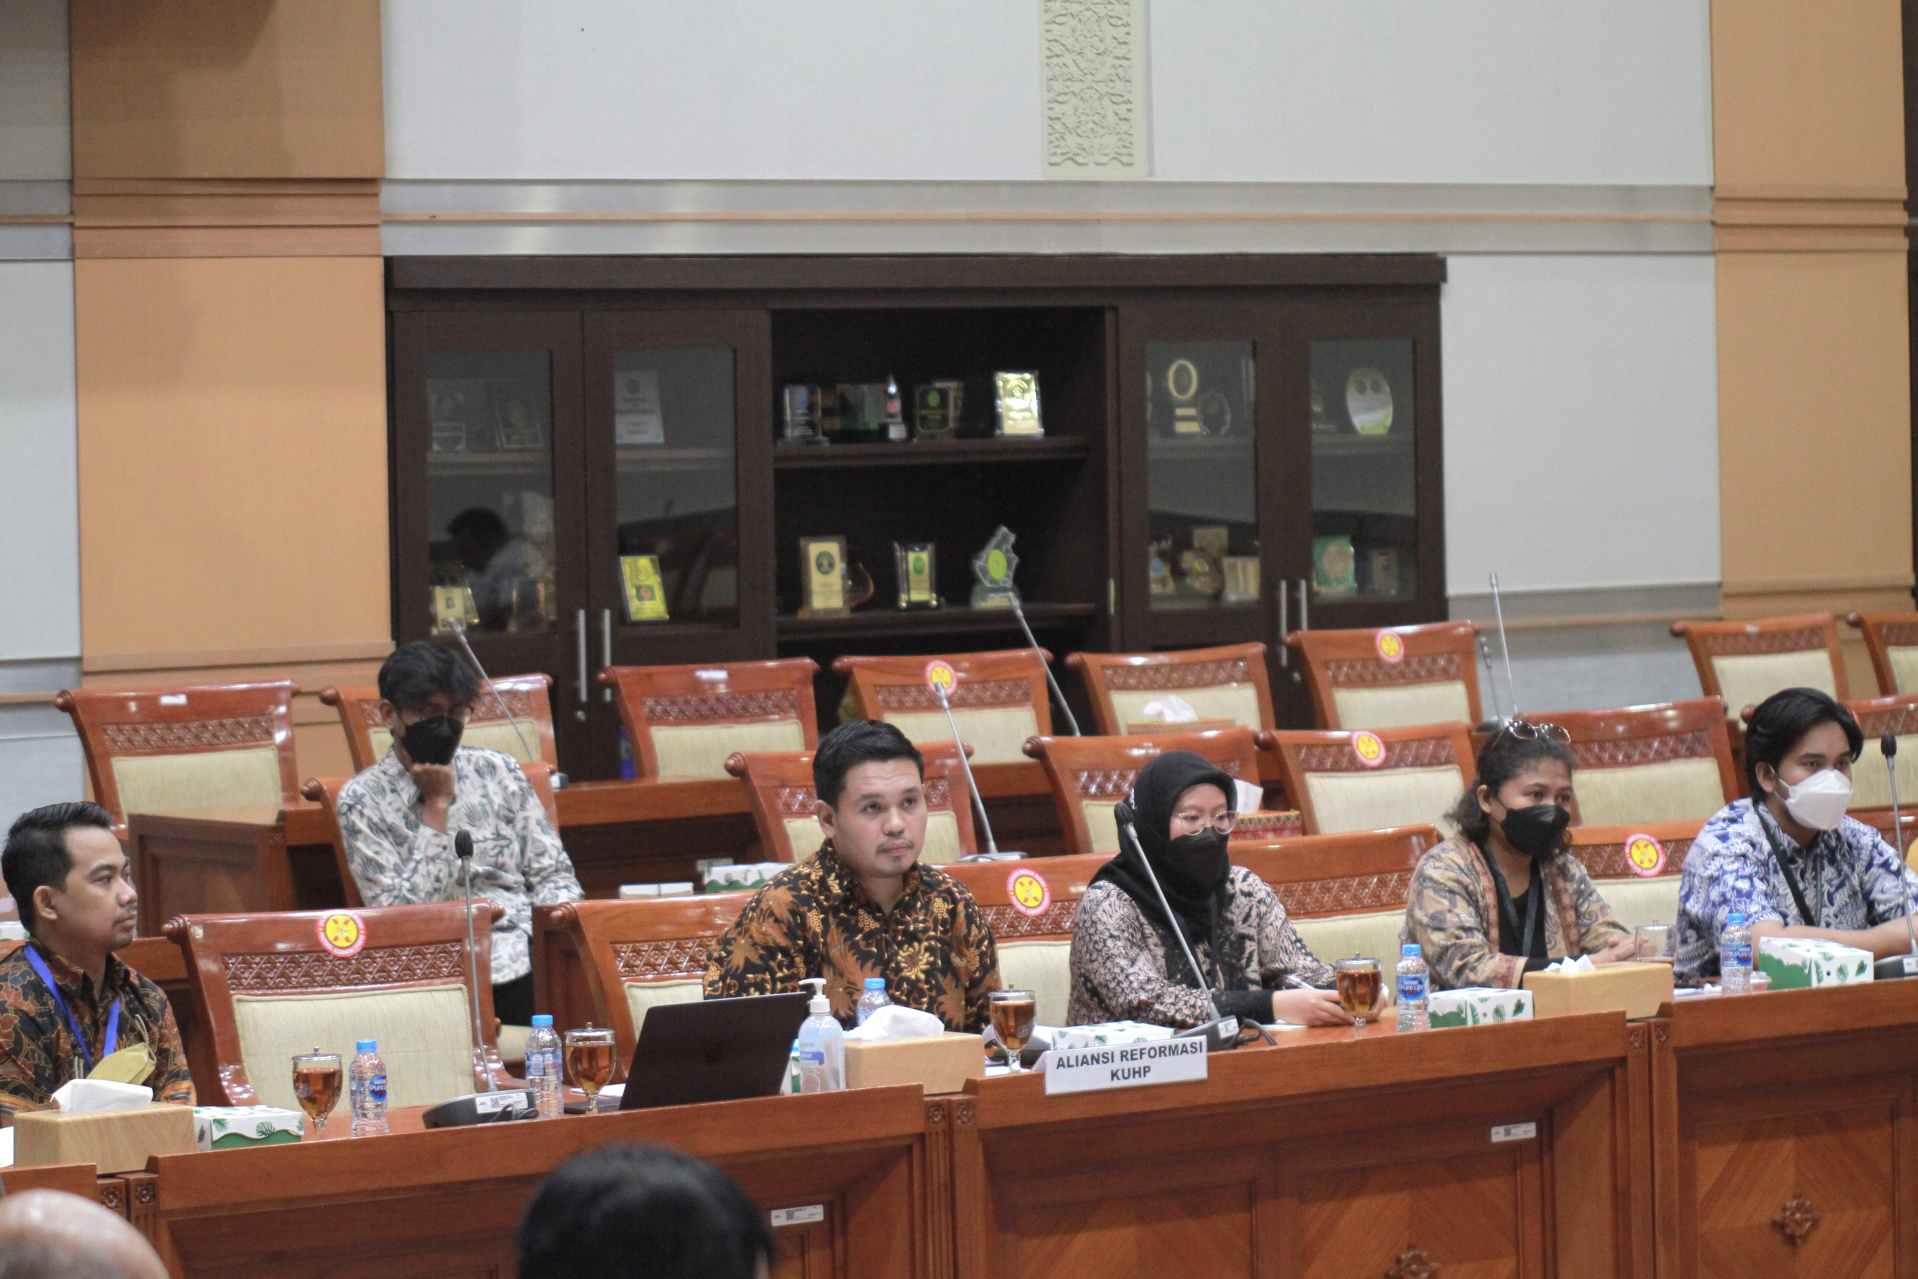 Komisi III DPR gelar RDPU bersama Aliansi Reformasi KUHP di Kompleks Parlemen (Ashar/SinPo.id)